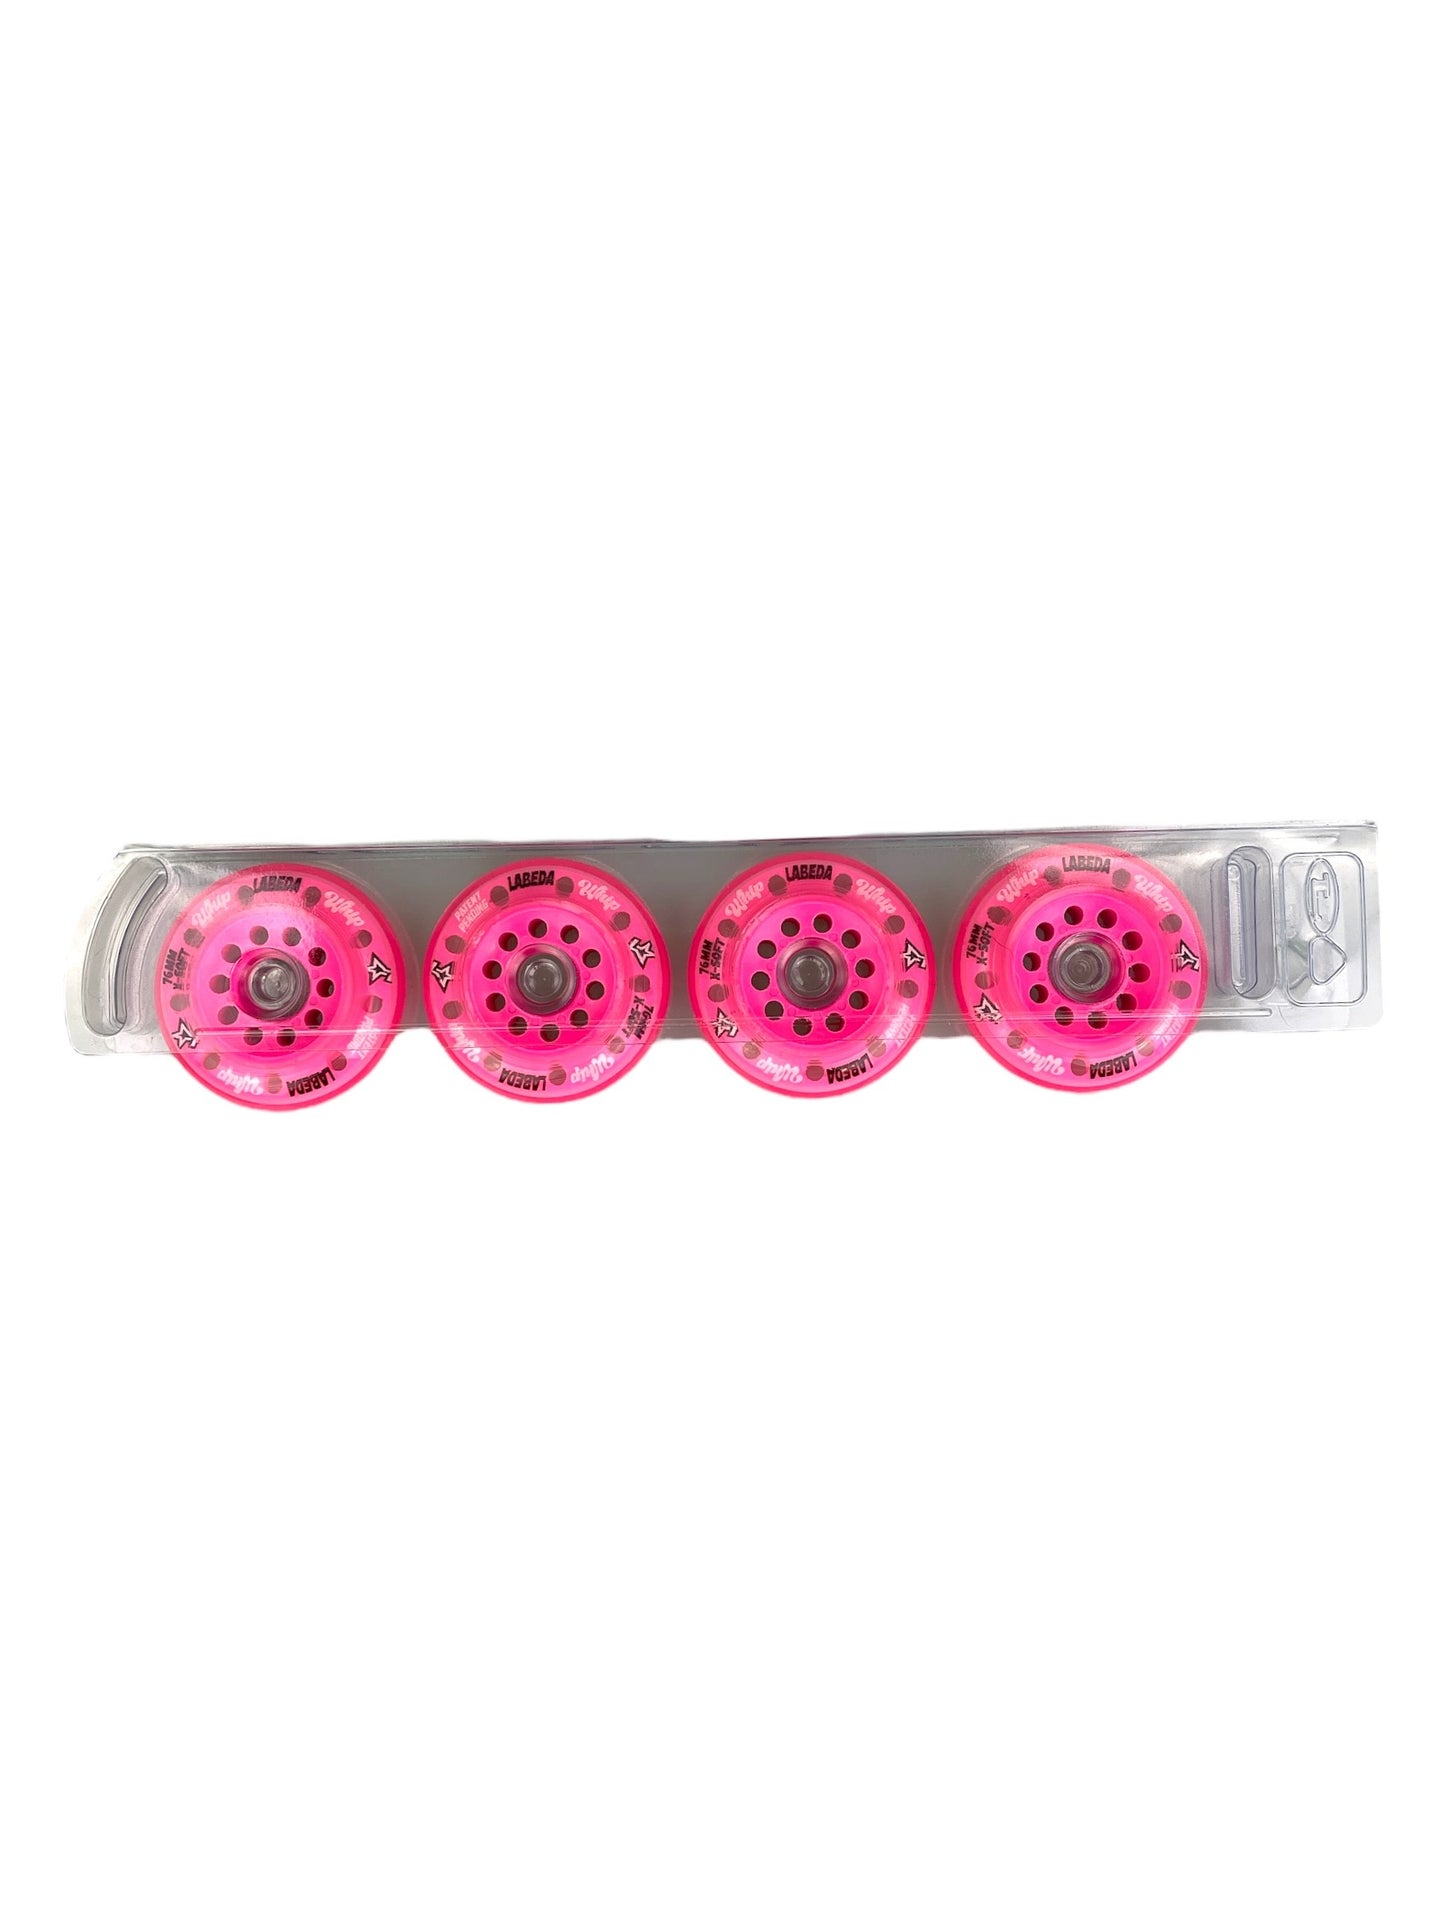 Labeda Roller Hockey Wheel Whip X-Soft – Pink